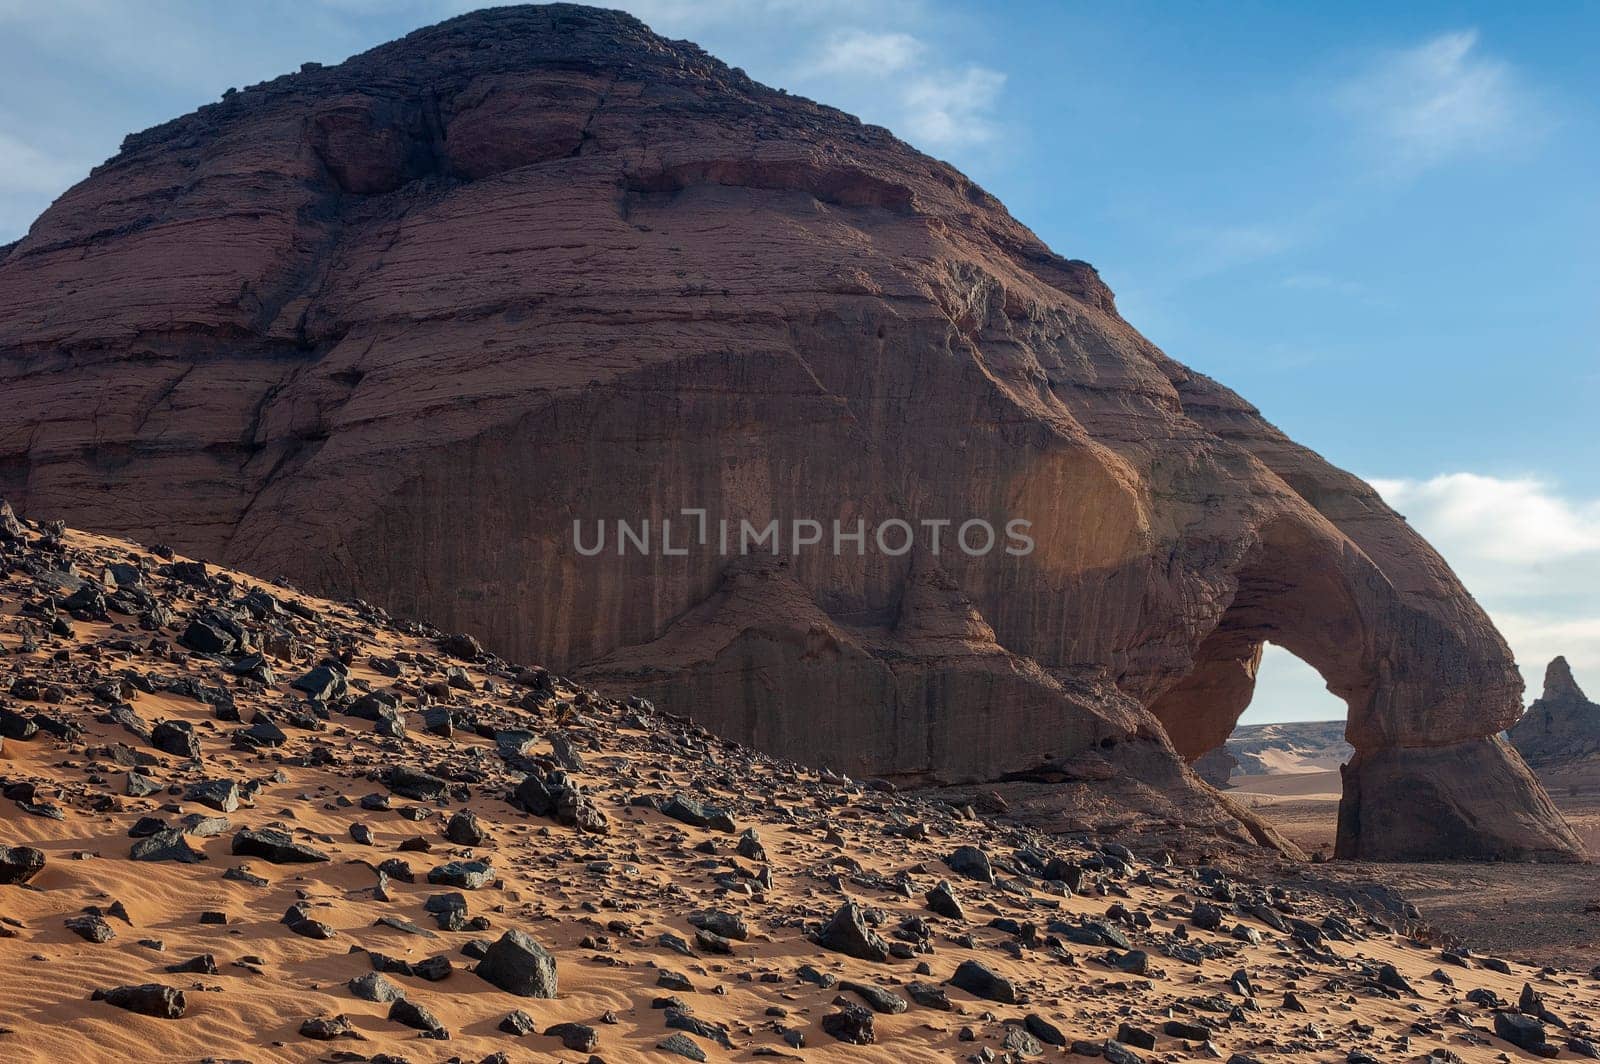 Sandstone rock formations in Akakus (Acacus), Sahara Desert, Libya.